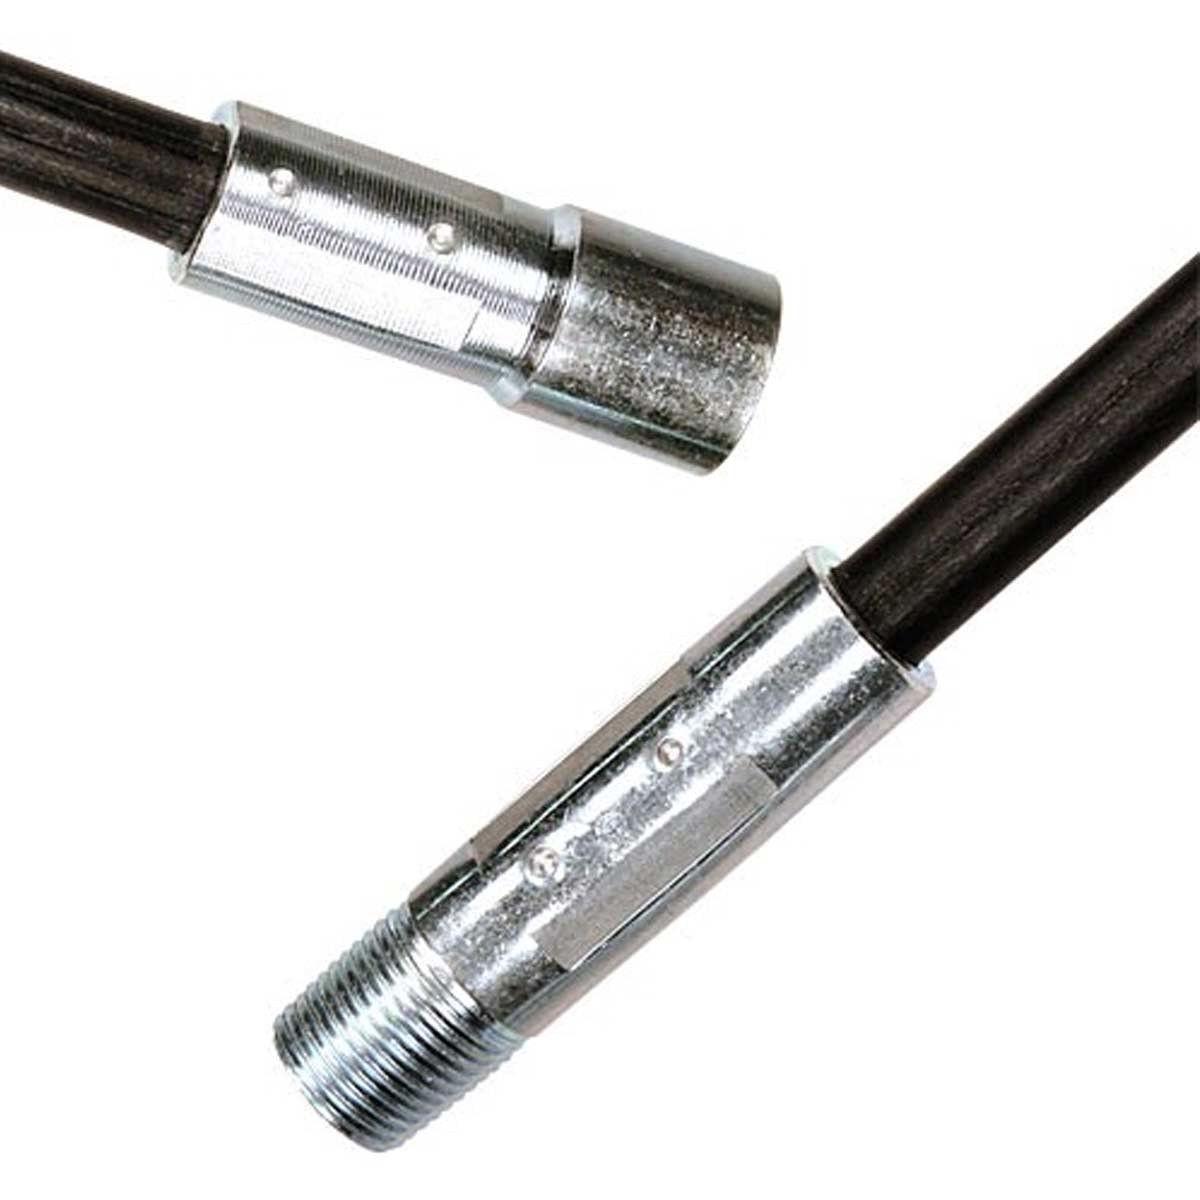 Buttonlok Connector With 3/8" Pt Male Fiber Glass Rod End